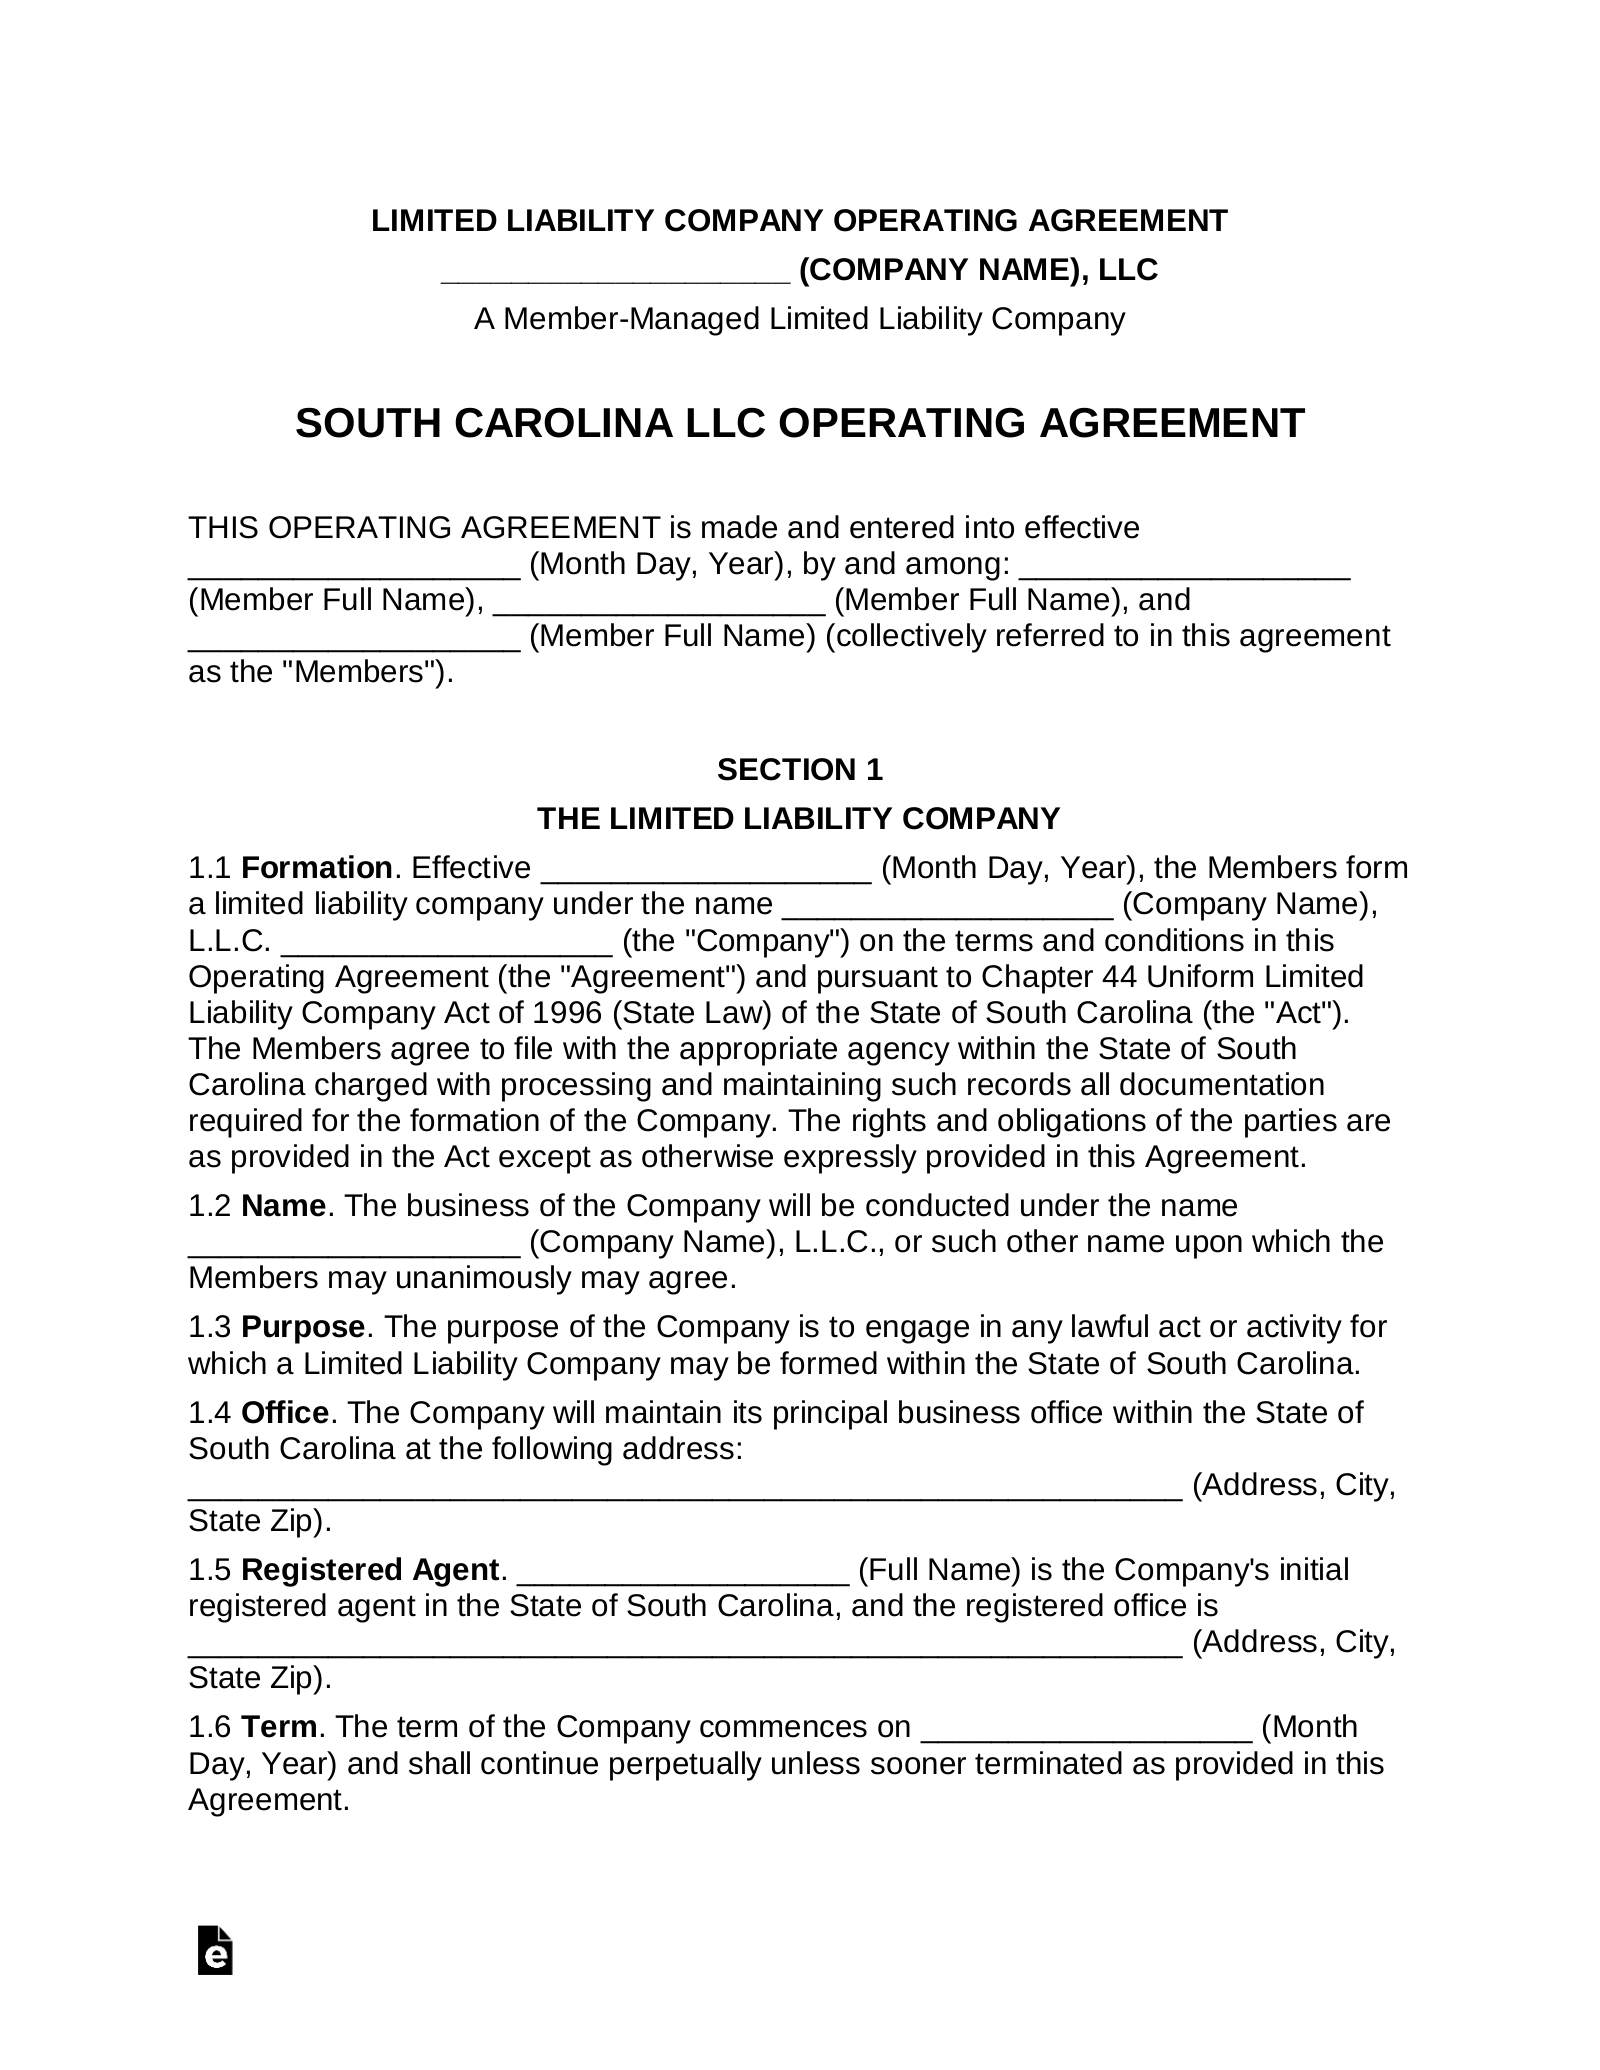 South Carolina Multi-Member LLC Operating Agreement Form